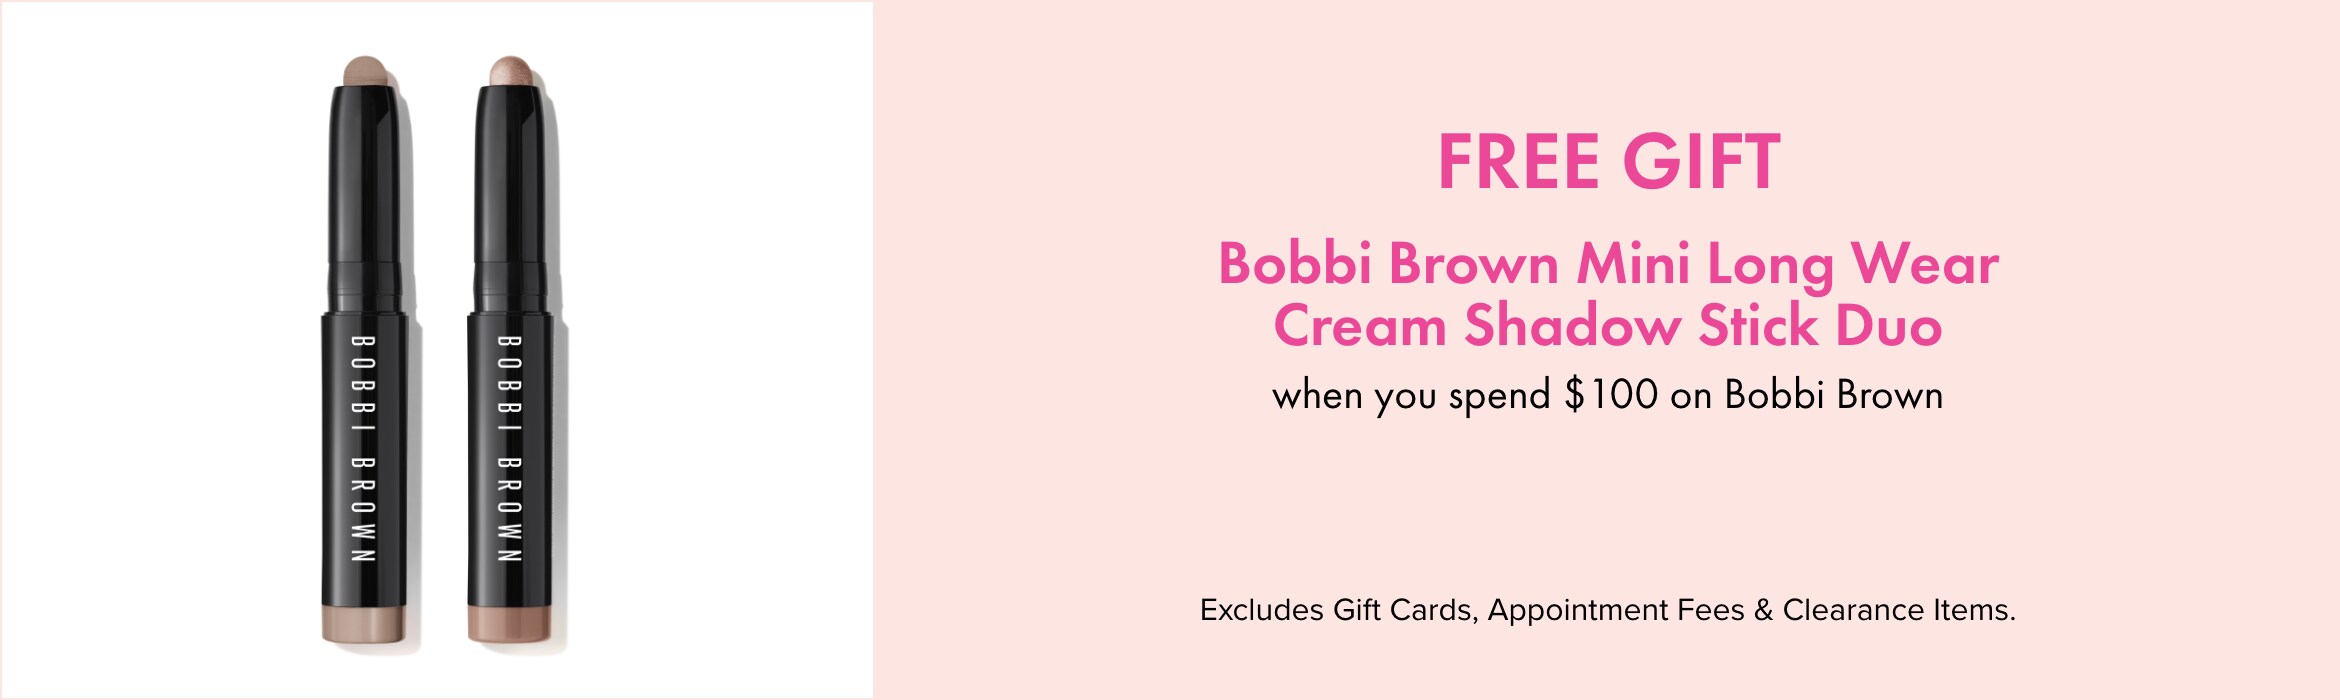 FREE GIFT FREE Bobbi Brown Mini Long-Wear Cream Shadow Stick Duo when you spend $100 on Bobbi Brown